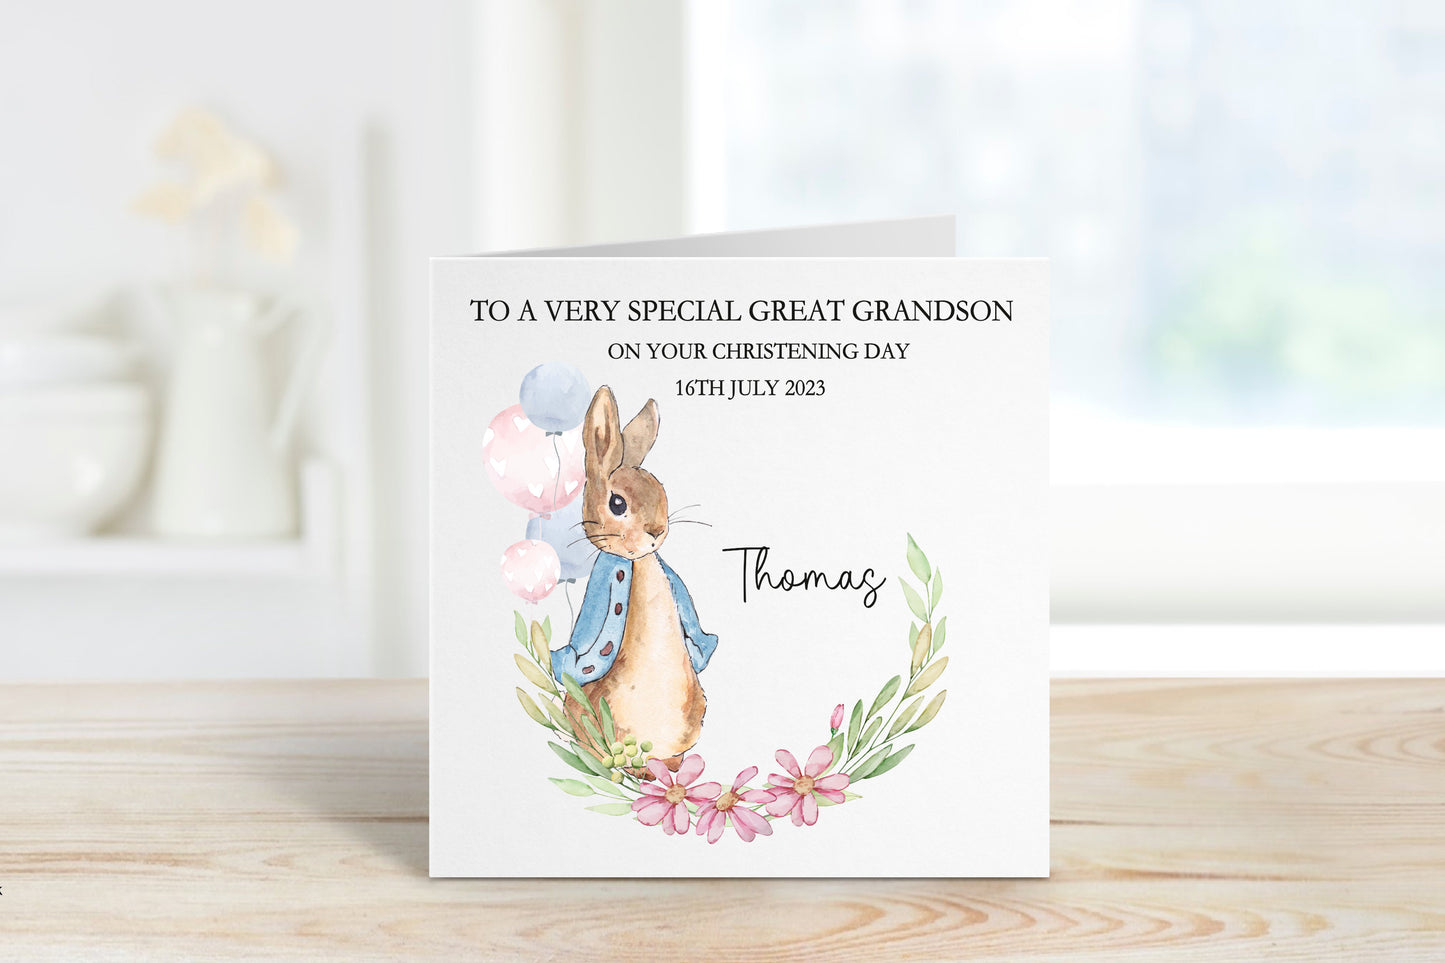 Great Nephew Christening Card, Personalised Christening Card, Christening Card For Boy, Christening Card For Great Nephew, Bunny Rabbit Card